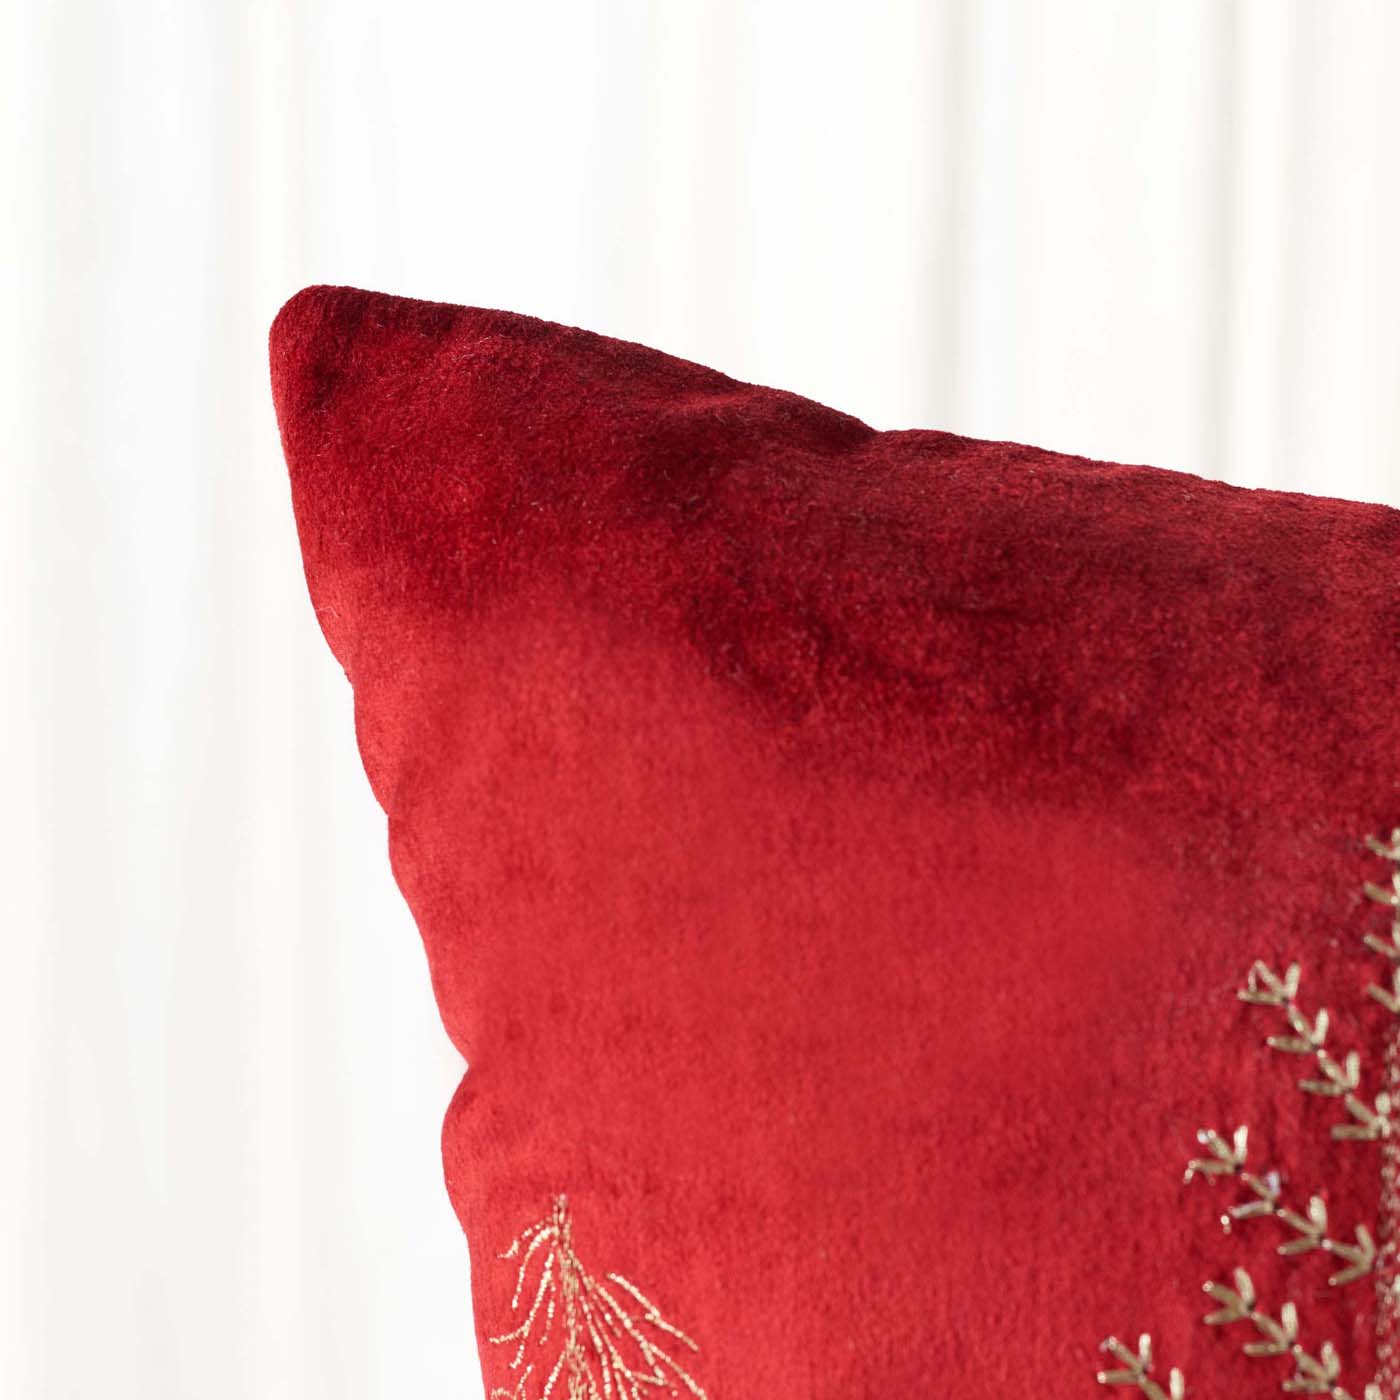 Safavieh Seasons Tree Pillow , HOL4000 - Red / Gold